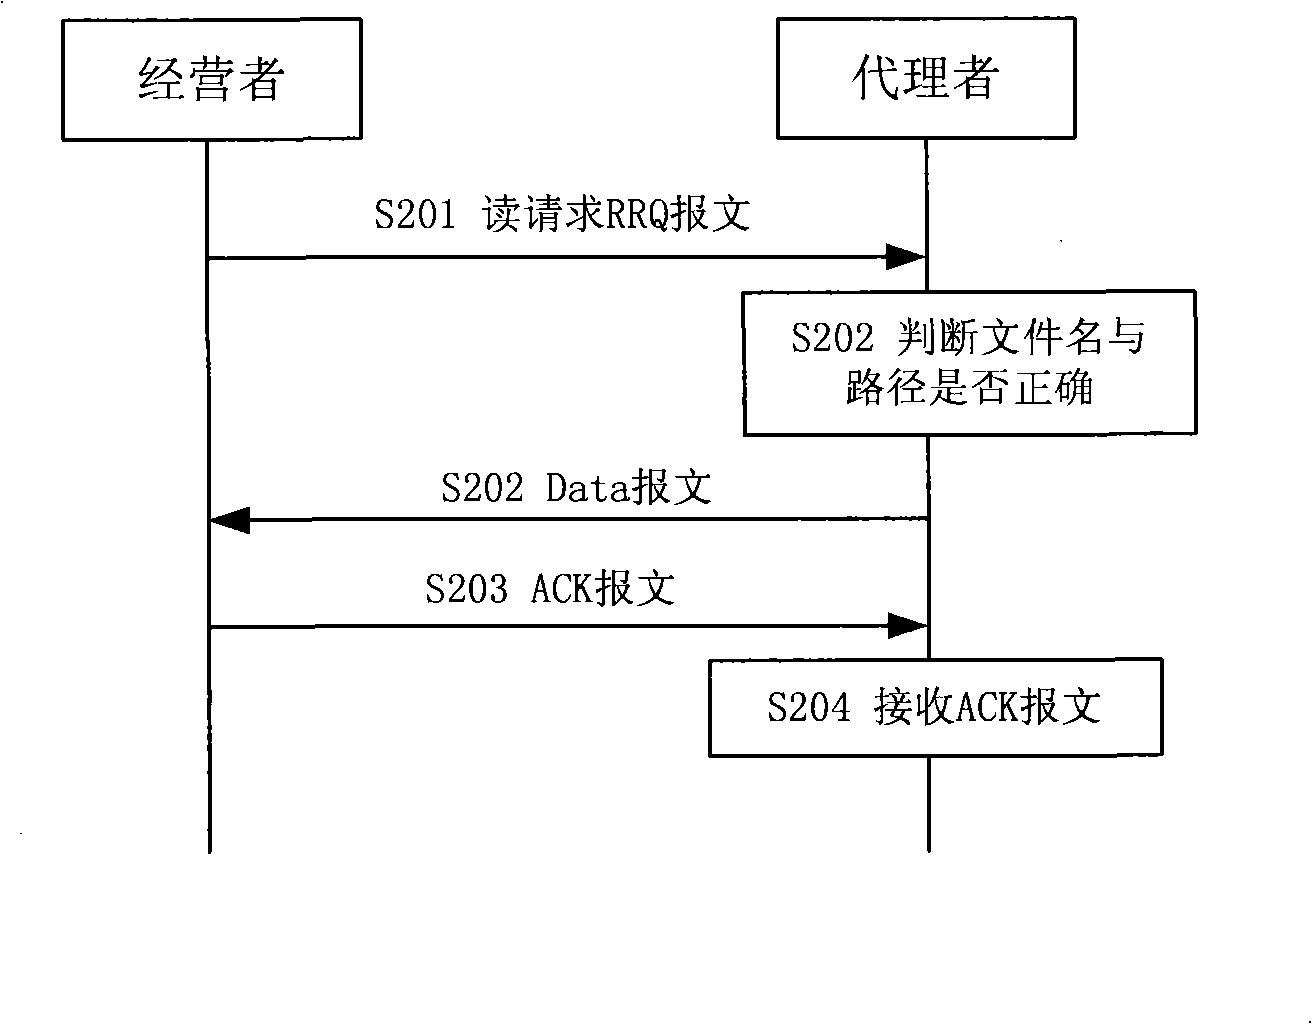 Document transmission method and apparatus